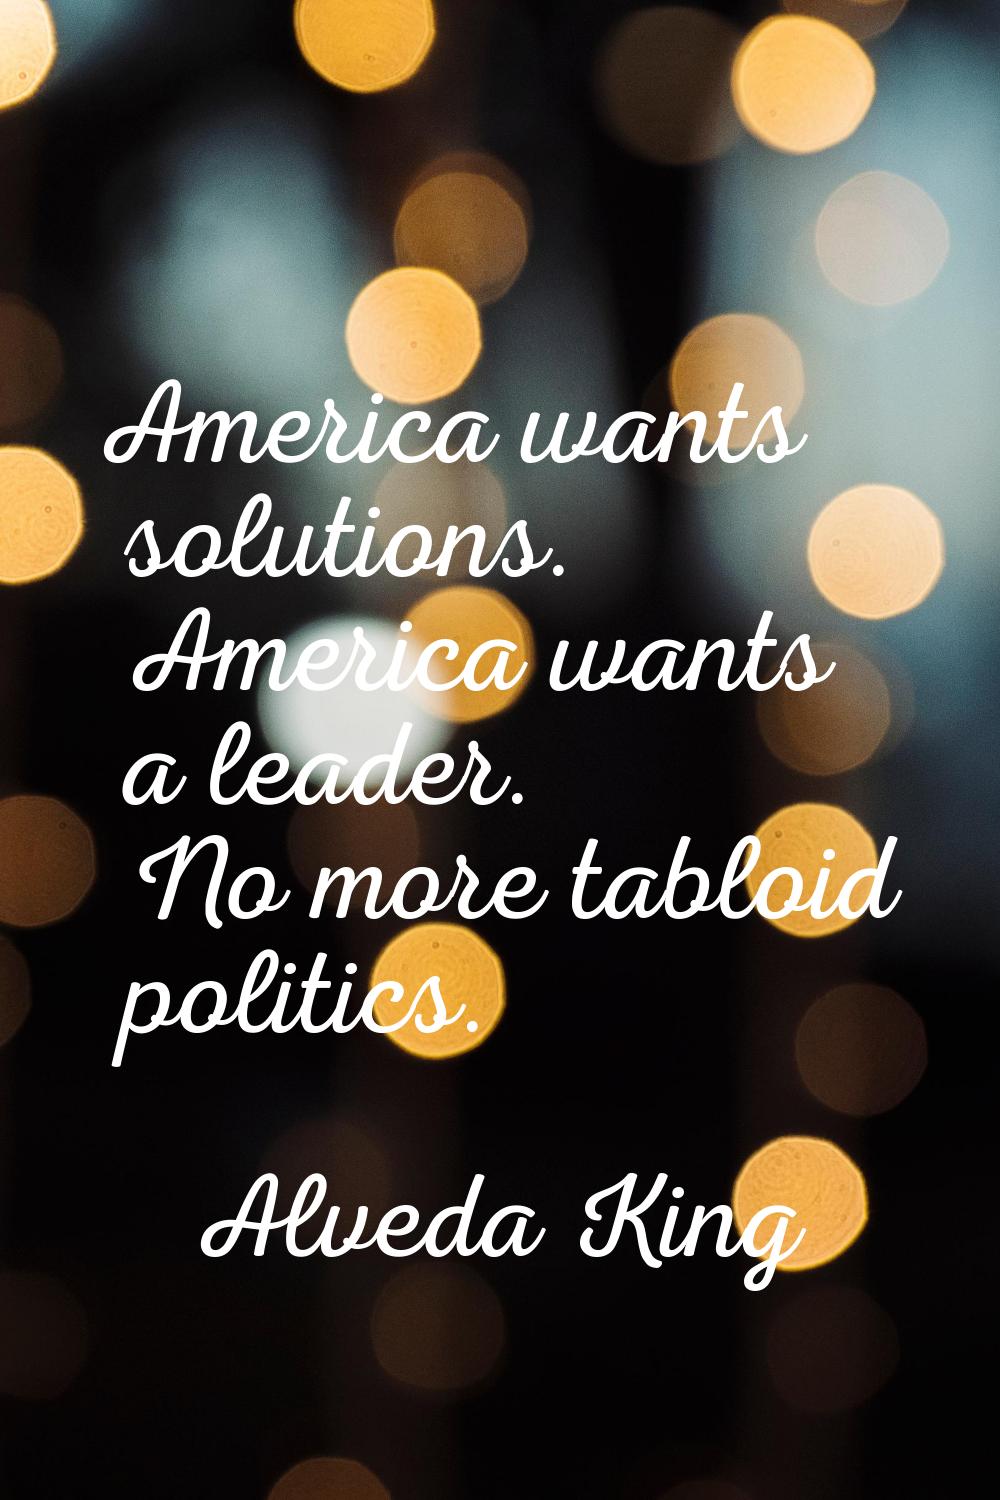 America wants solutions. America wants a leader. No more tabloid politics.